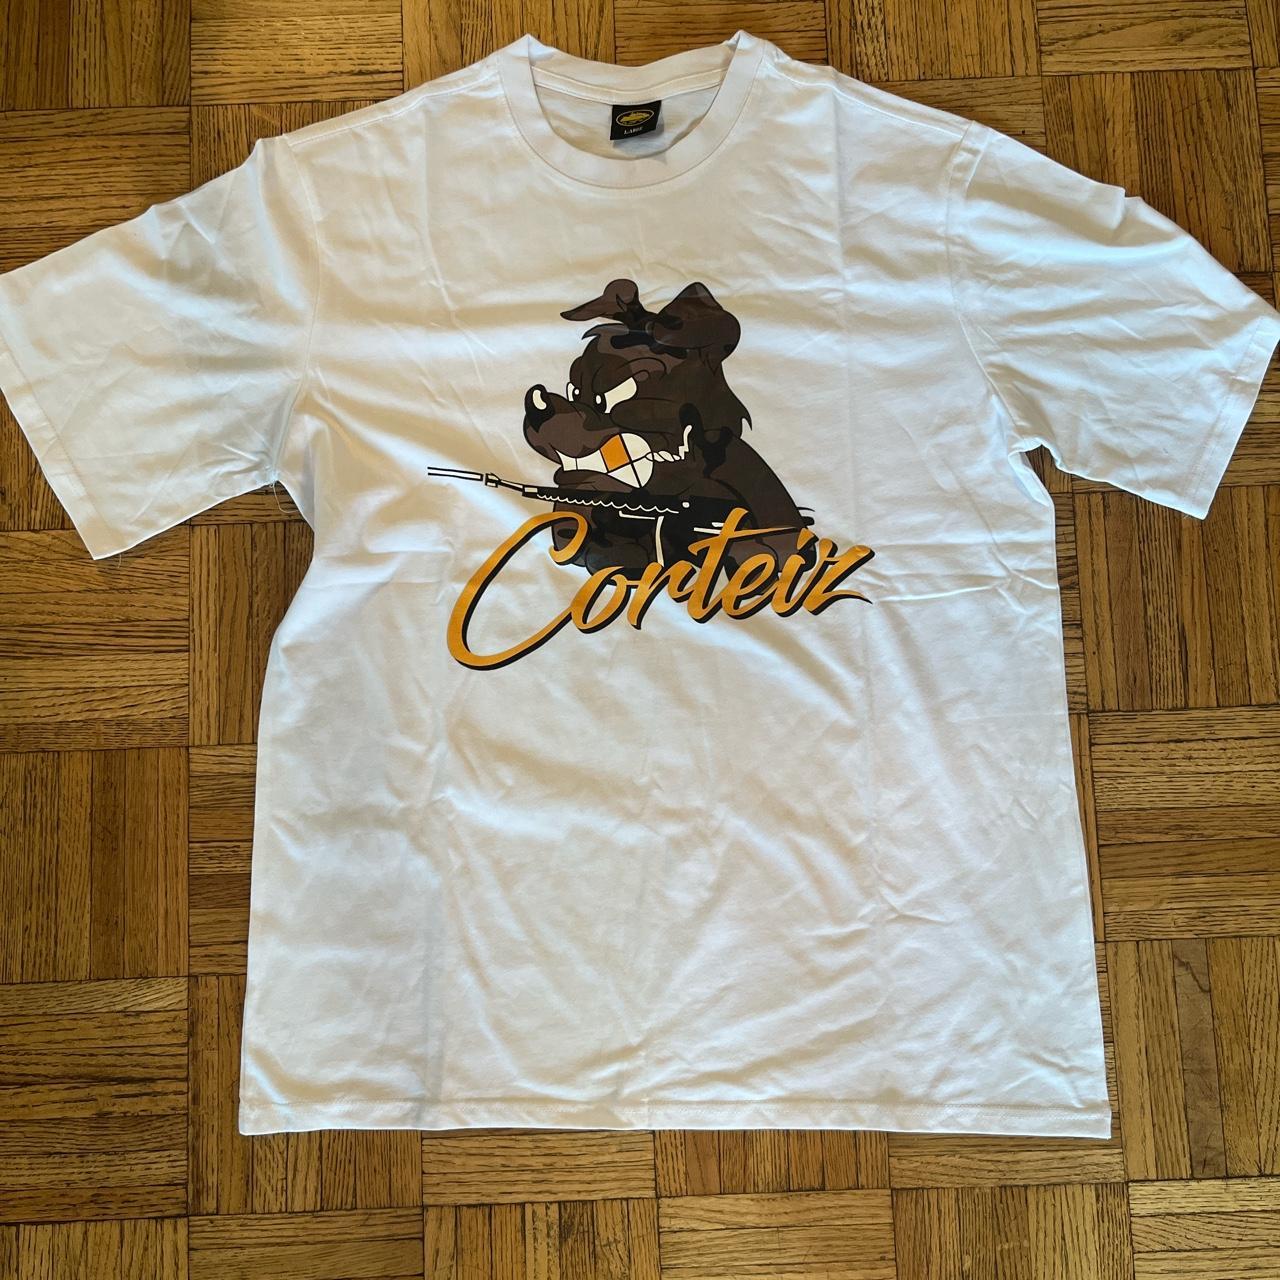 Corteiz K9 T-shirt White and Brown Large - Depop